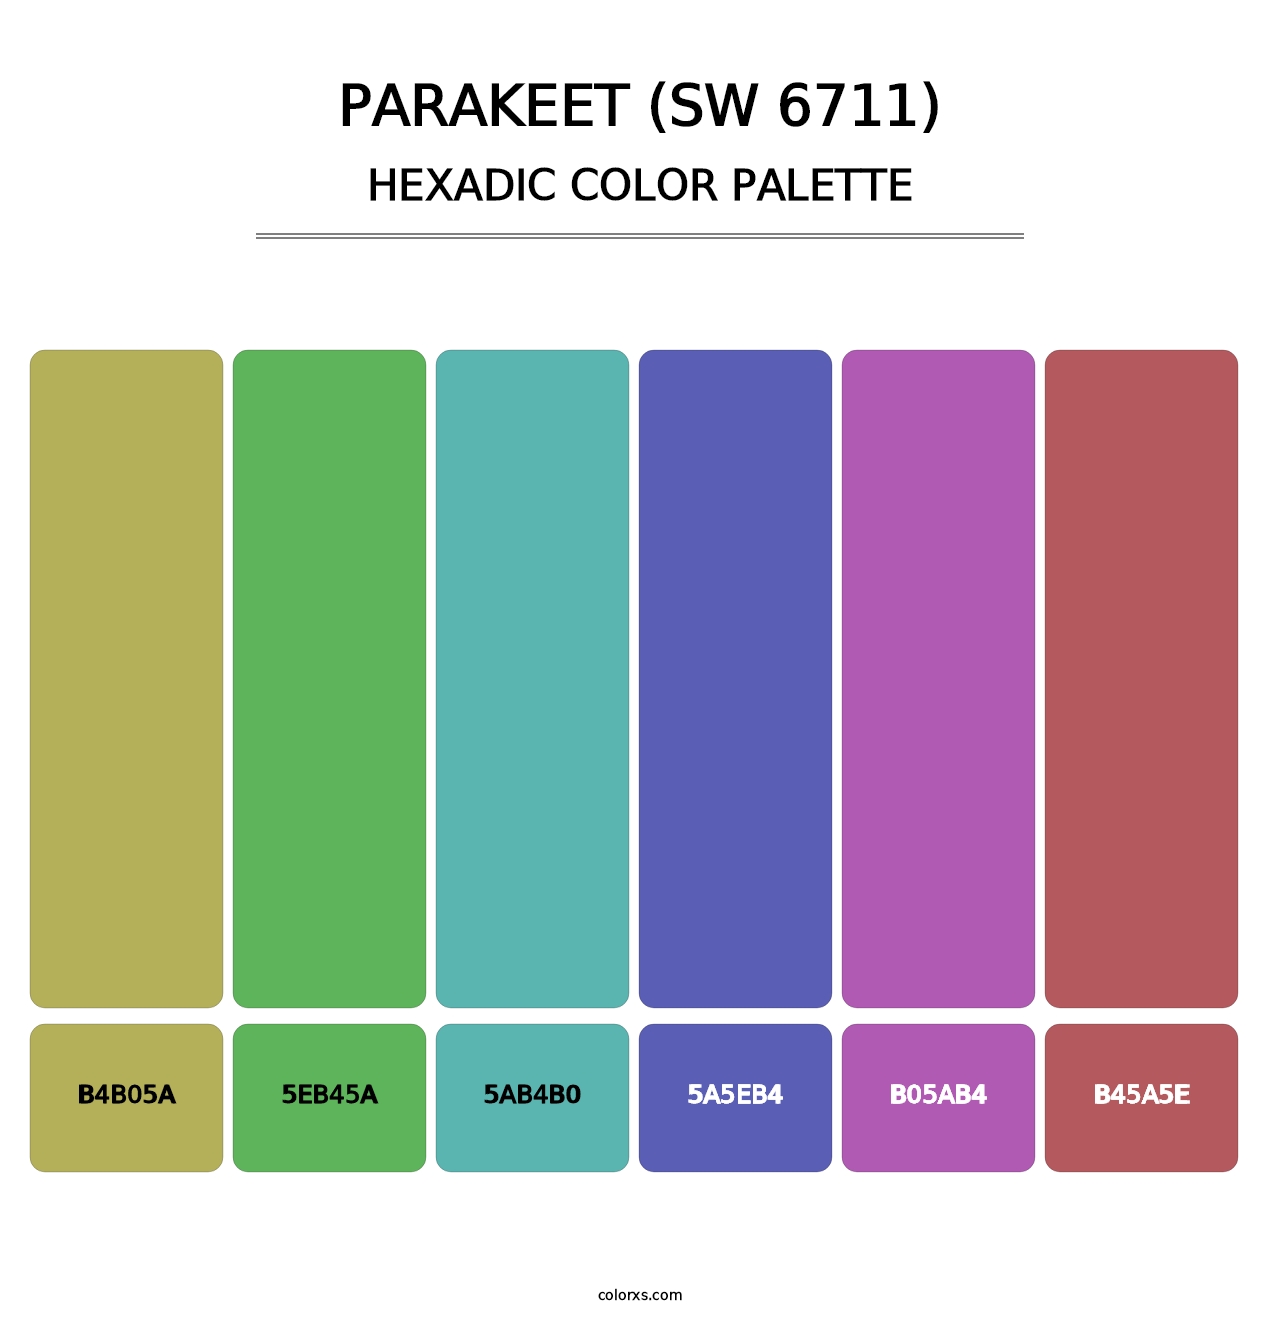 Parakeet (SW 6711) - Hexadic Color Palette